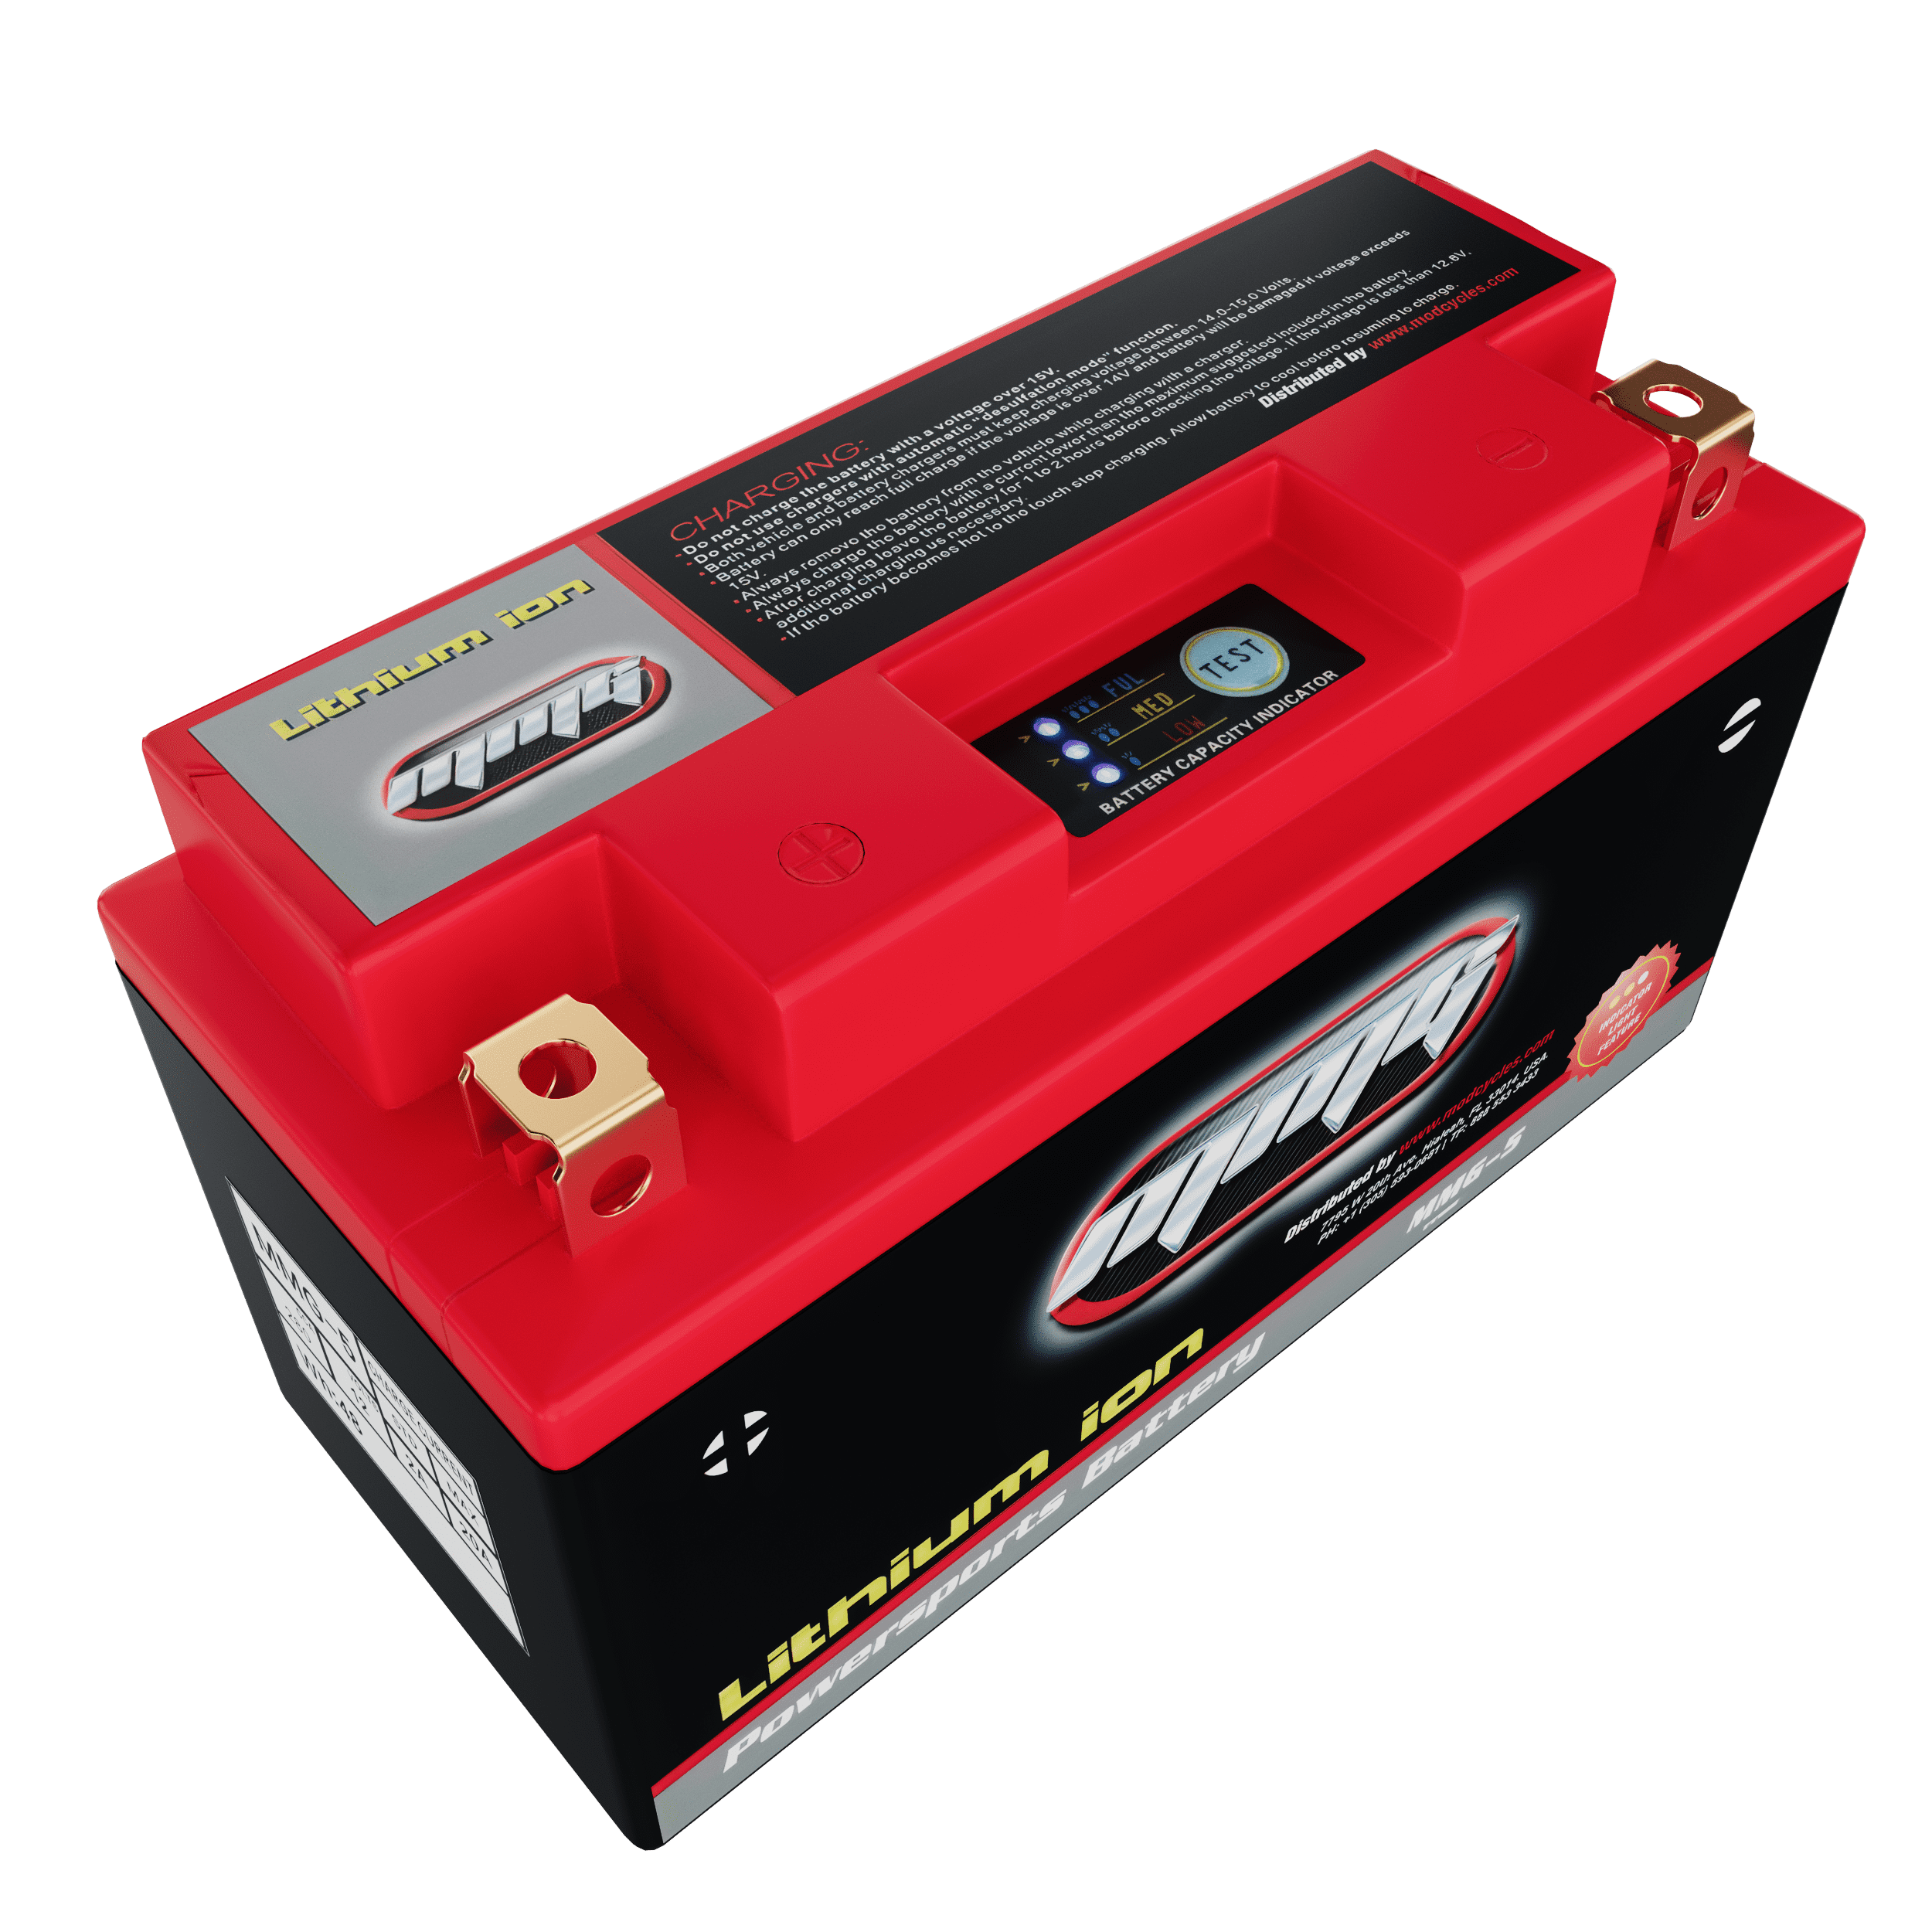 Batterie moto Numax Standard Y60-N30 / 53034 12V 28Ah 280A